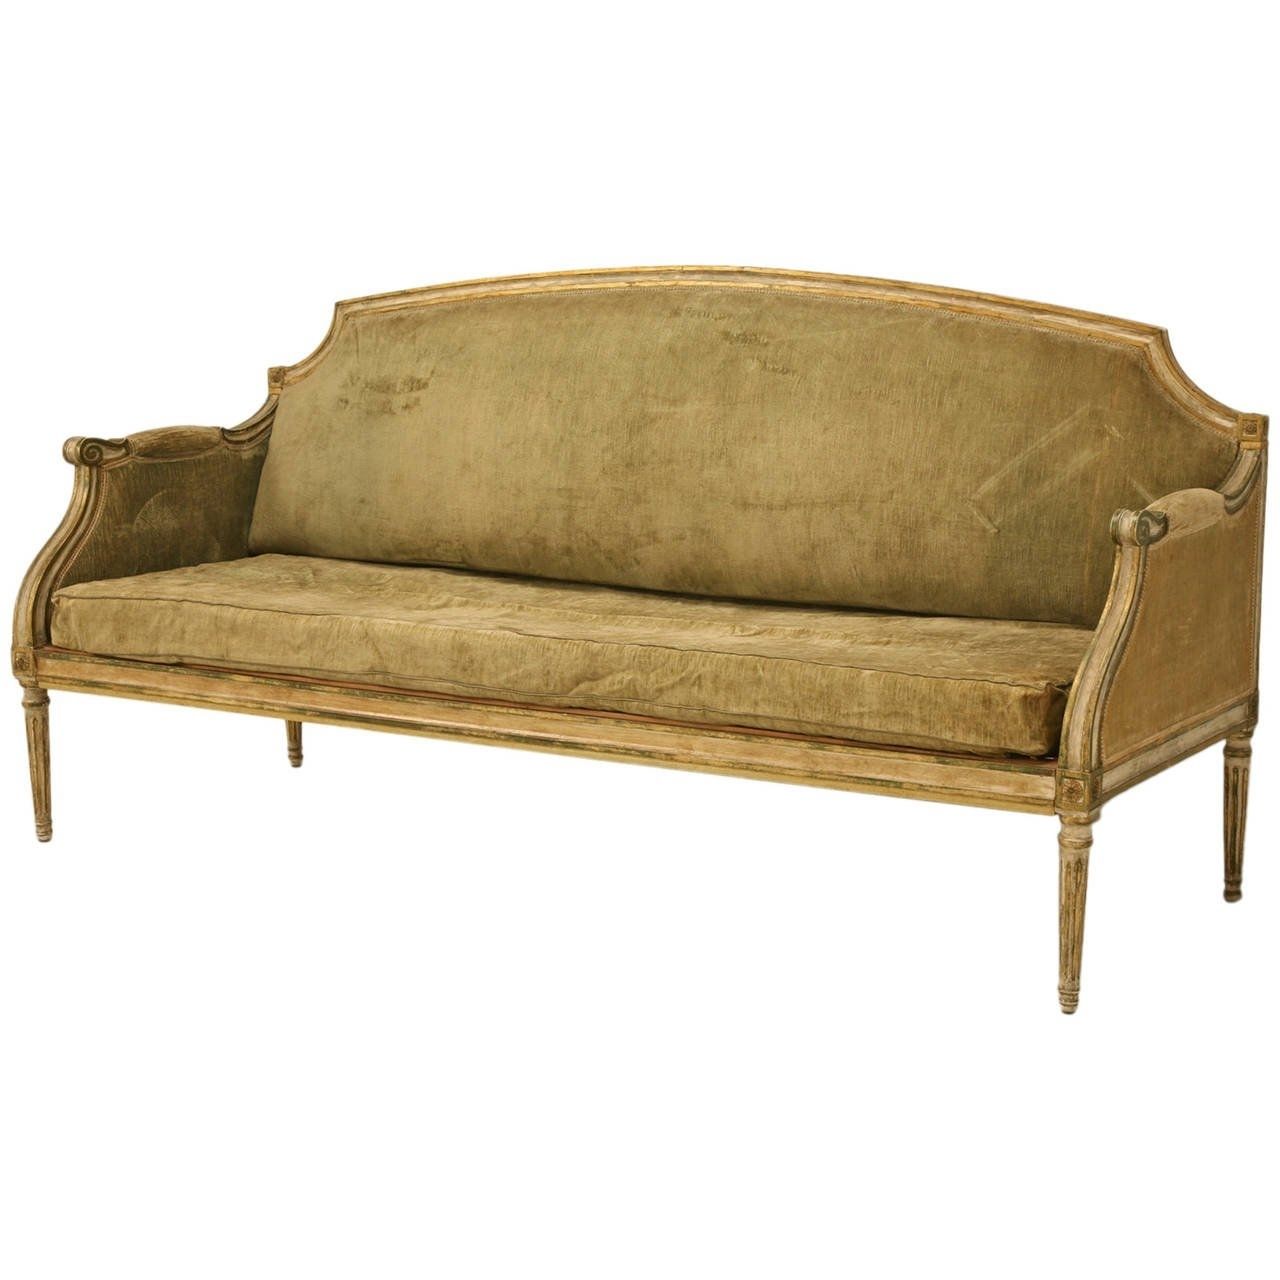 Xvi Style Antique Sofa In Incredible Original Paint At 1stdibs Regarding Antique Sofas (View 5 of 10)